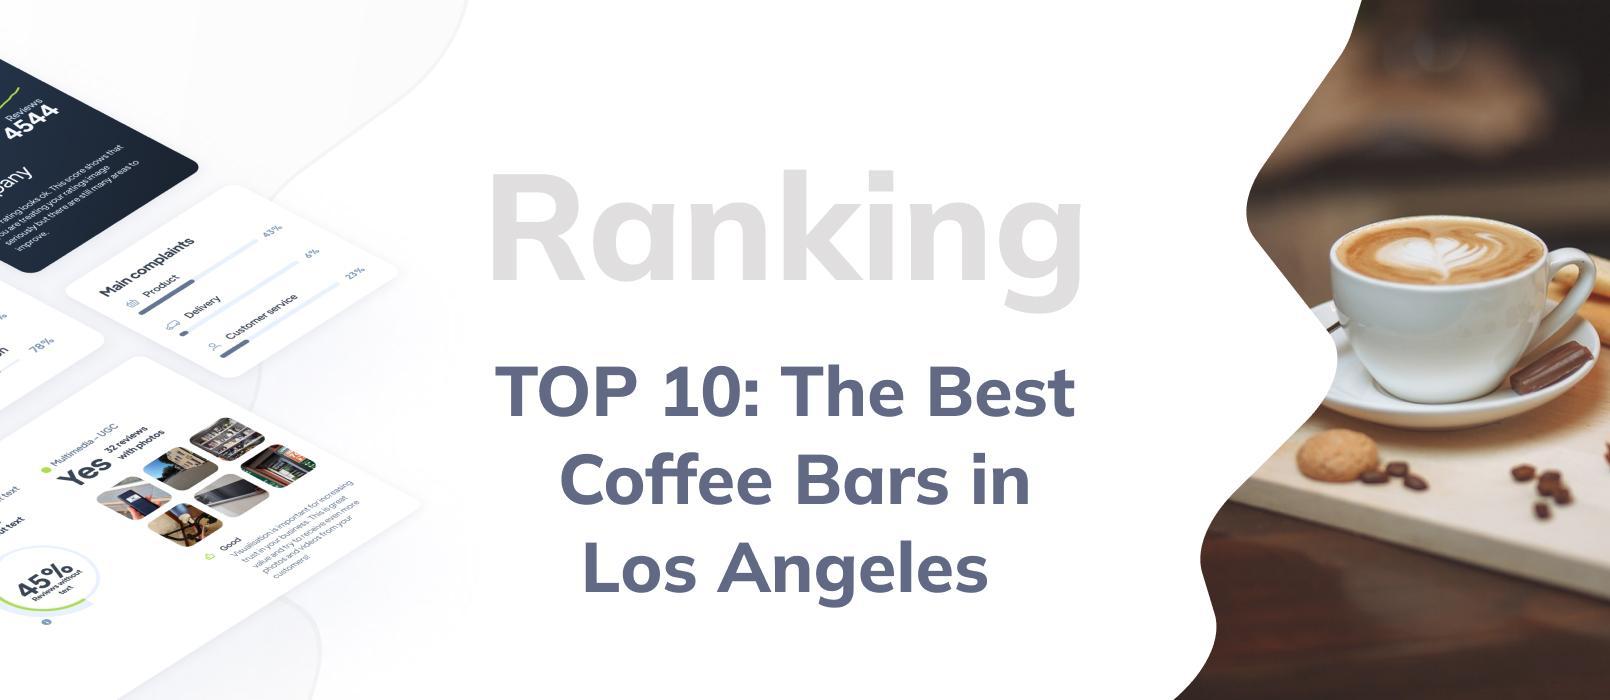 Coffee bars in Los Angeles - TOP 10 ranking